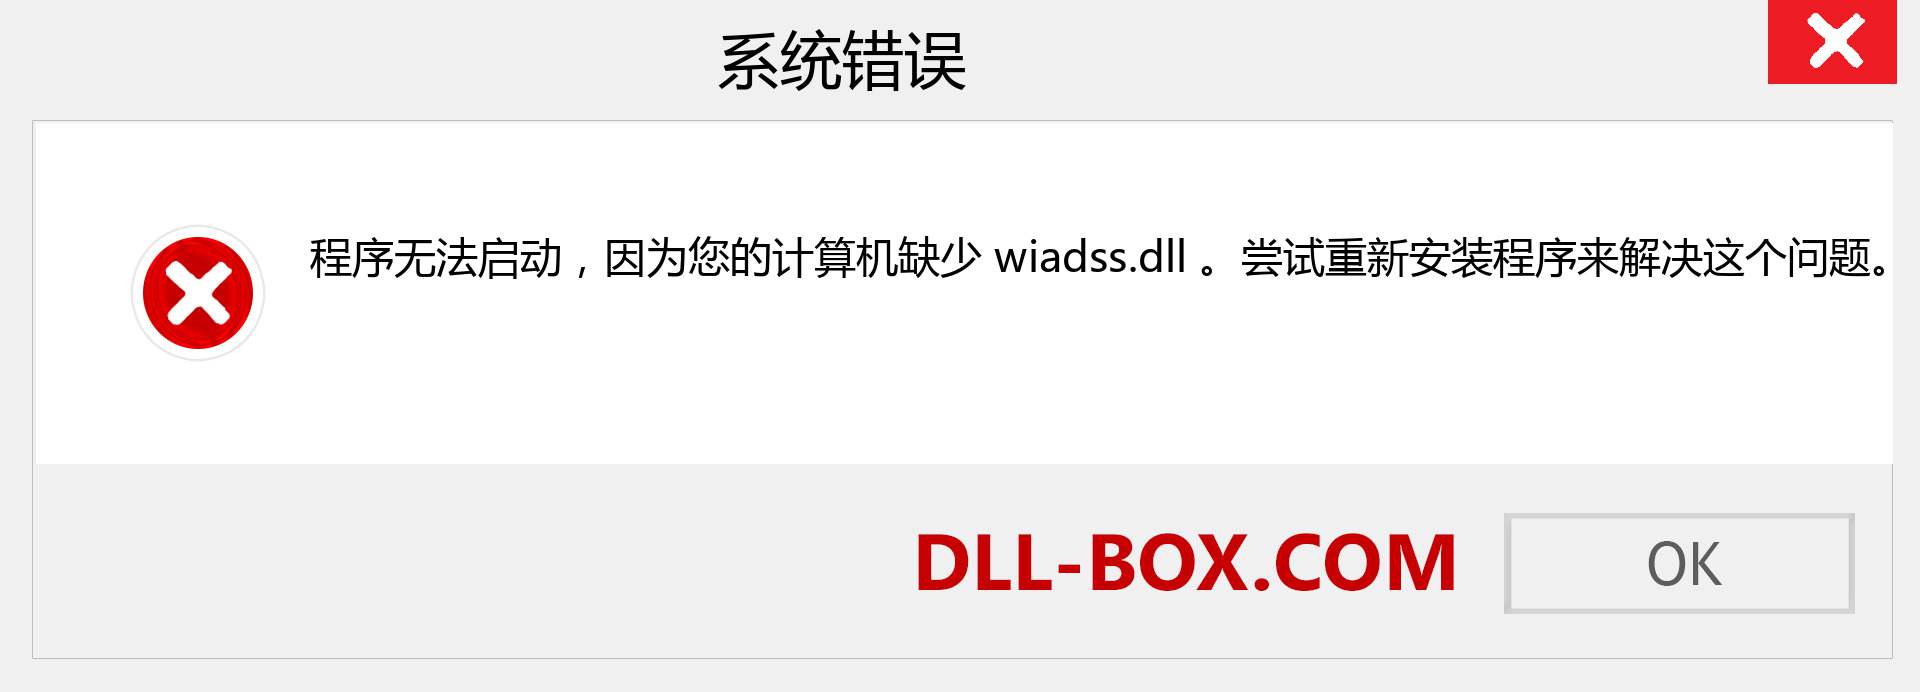 wiadss.dll 文件丢失？。 适用于 Windows 7、8、10 的下载 - 修复 Windows、照片、图像上的 wiadss dll 丢失错误